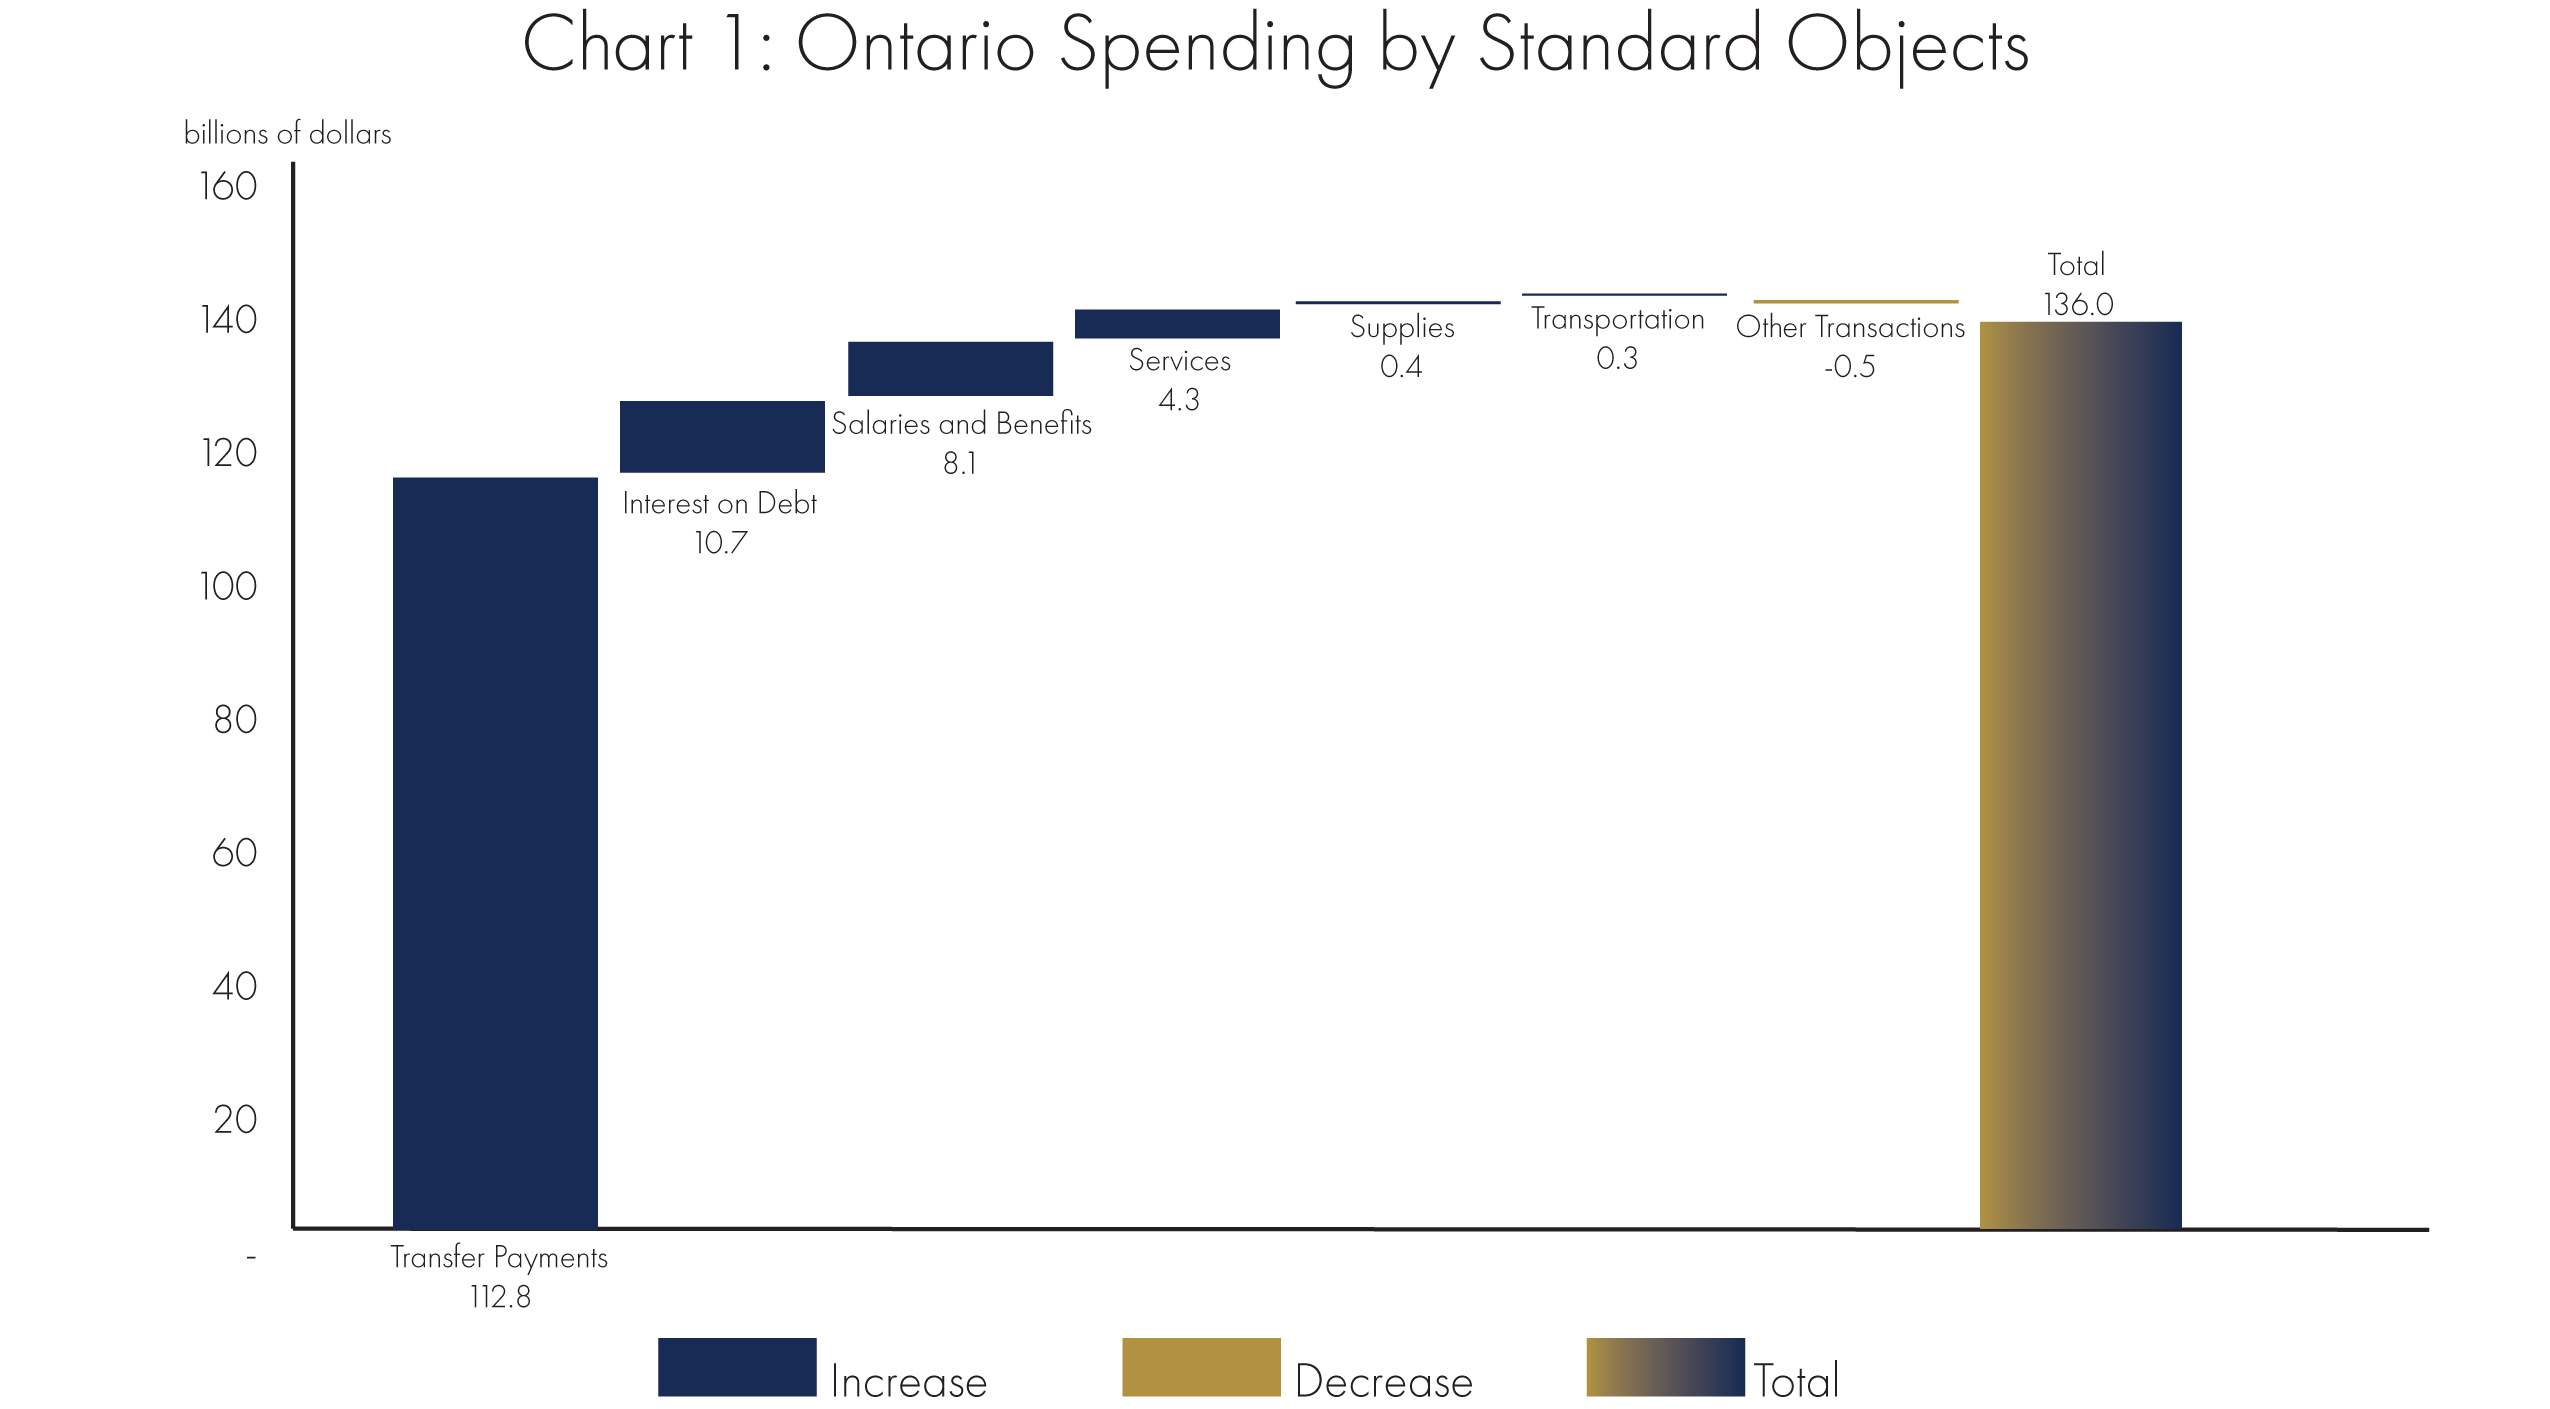 Cancer Care Ontario Organizational Chart